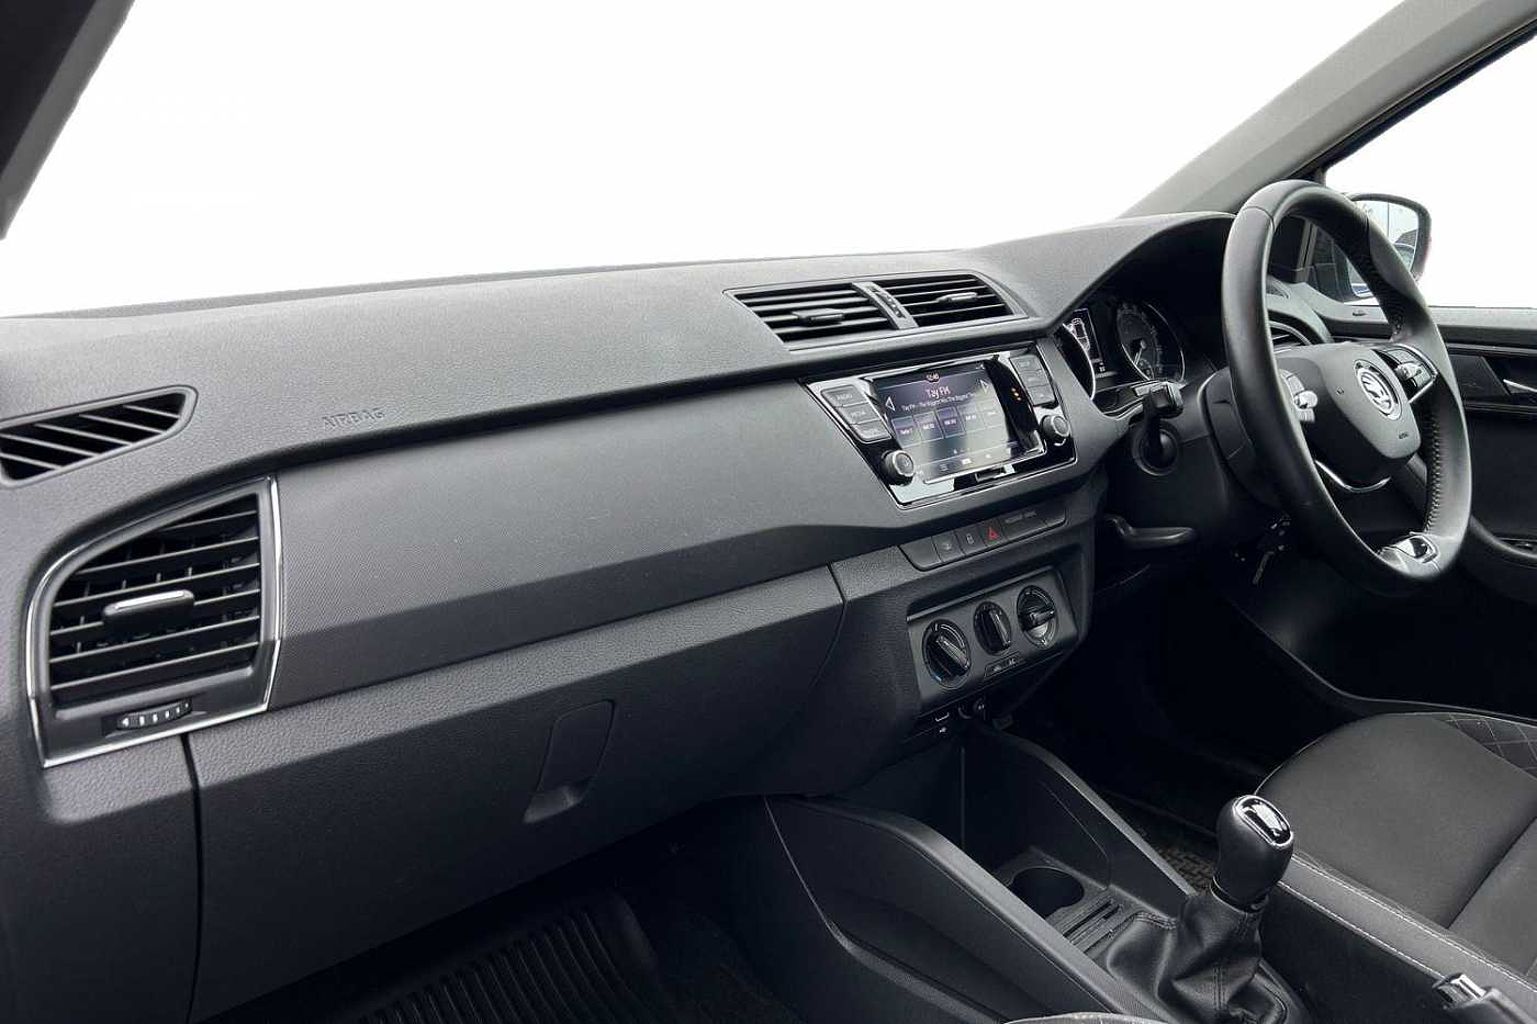 SKODA Fabia 1.0 MPI (60ps) Colour Edition 5-Dr Hatchback